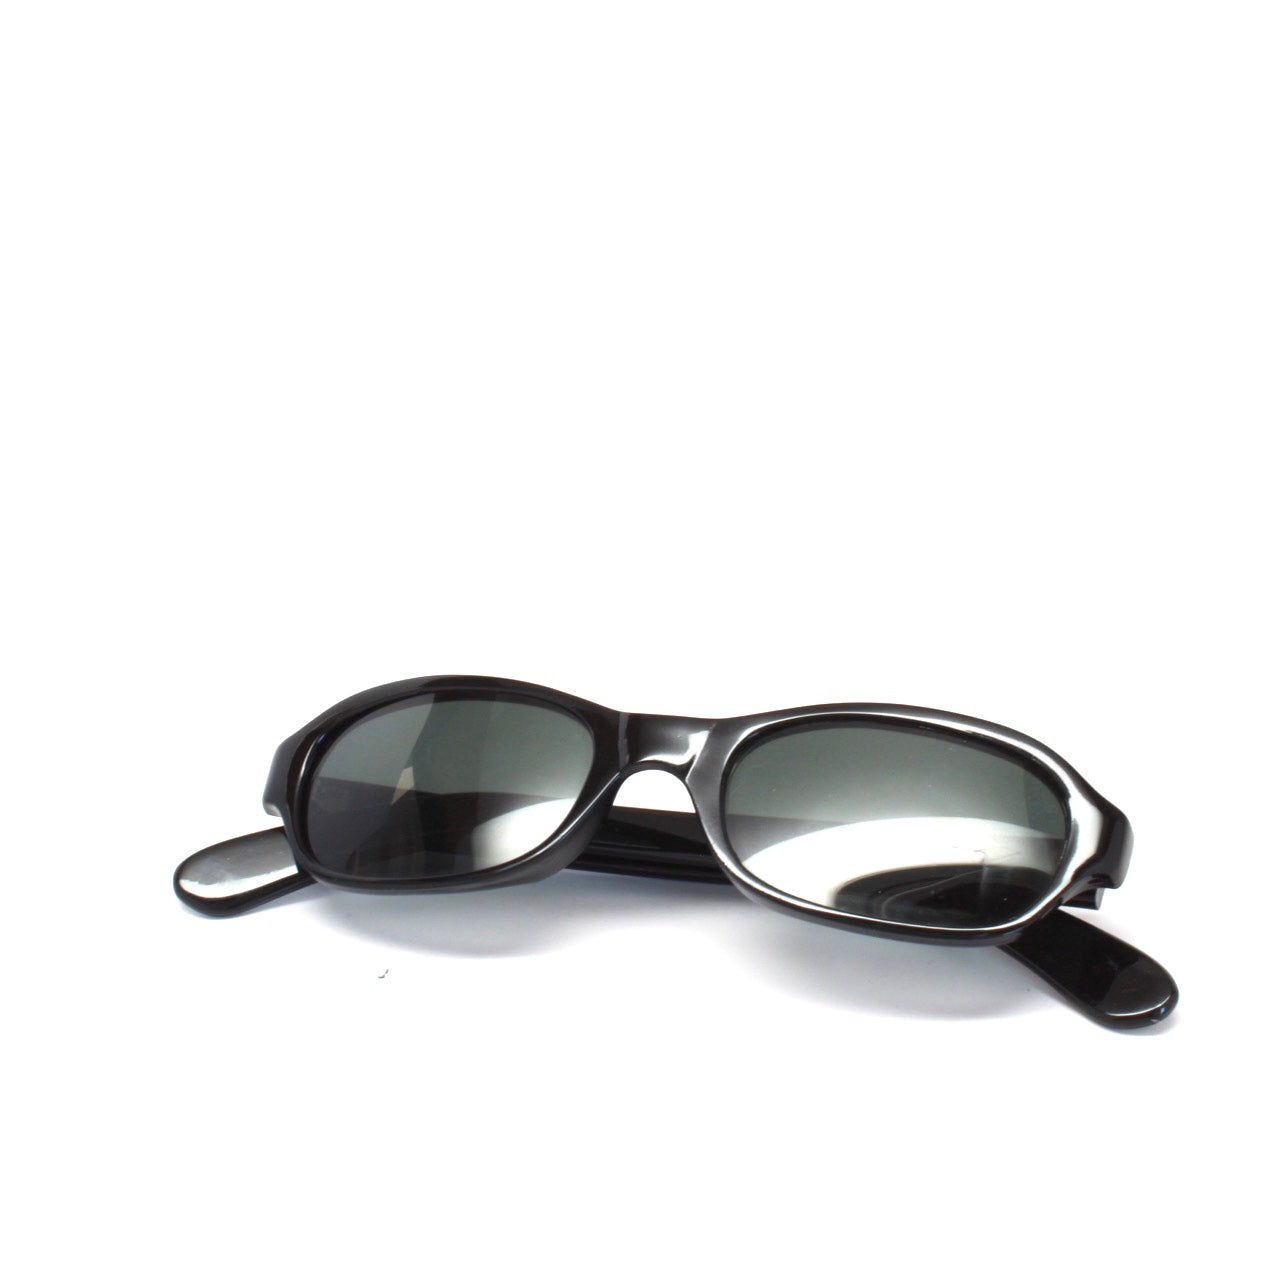 Vintage Standard Size 90s Mod Oval Frame Sunglasses - Black